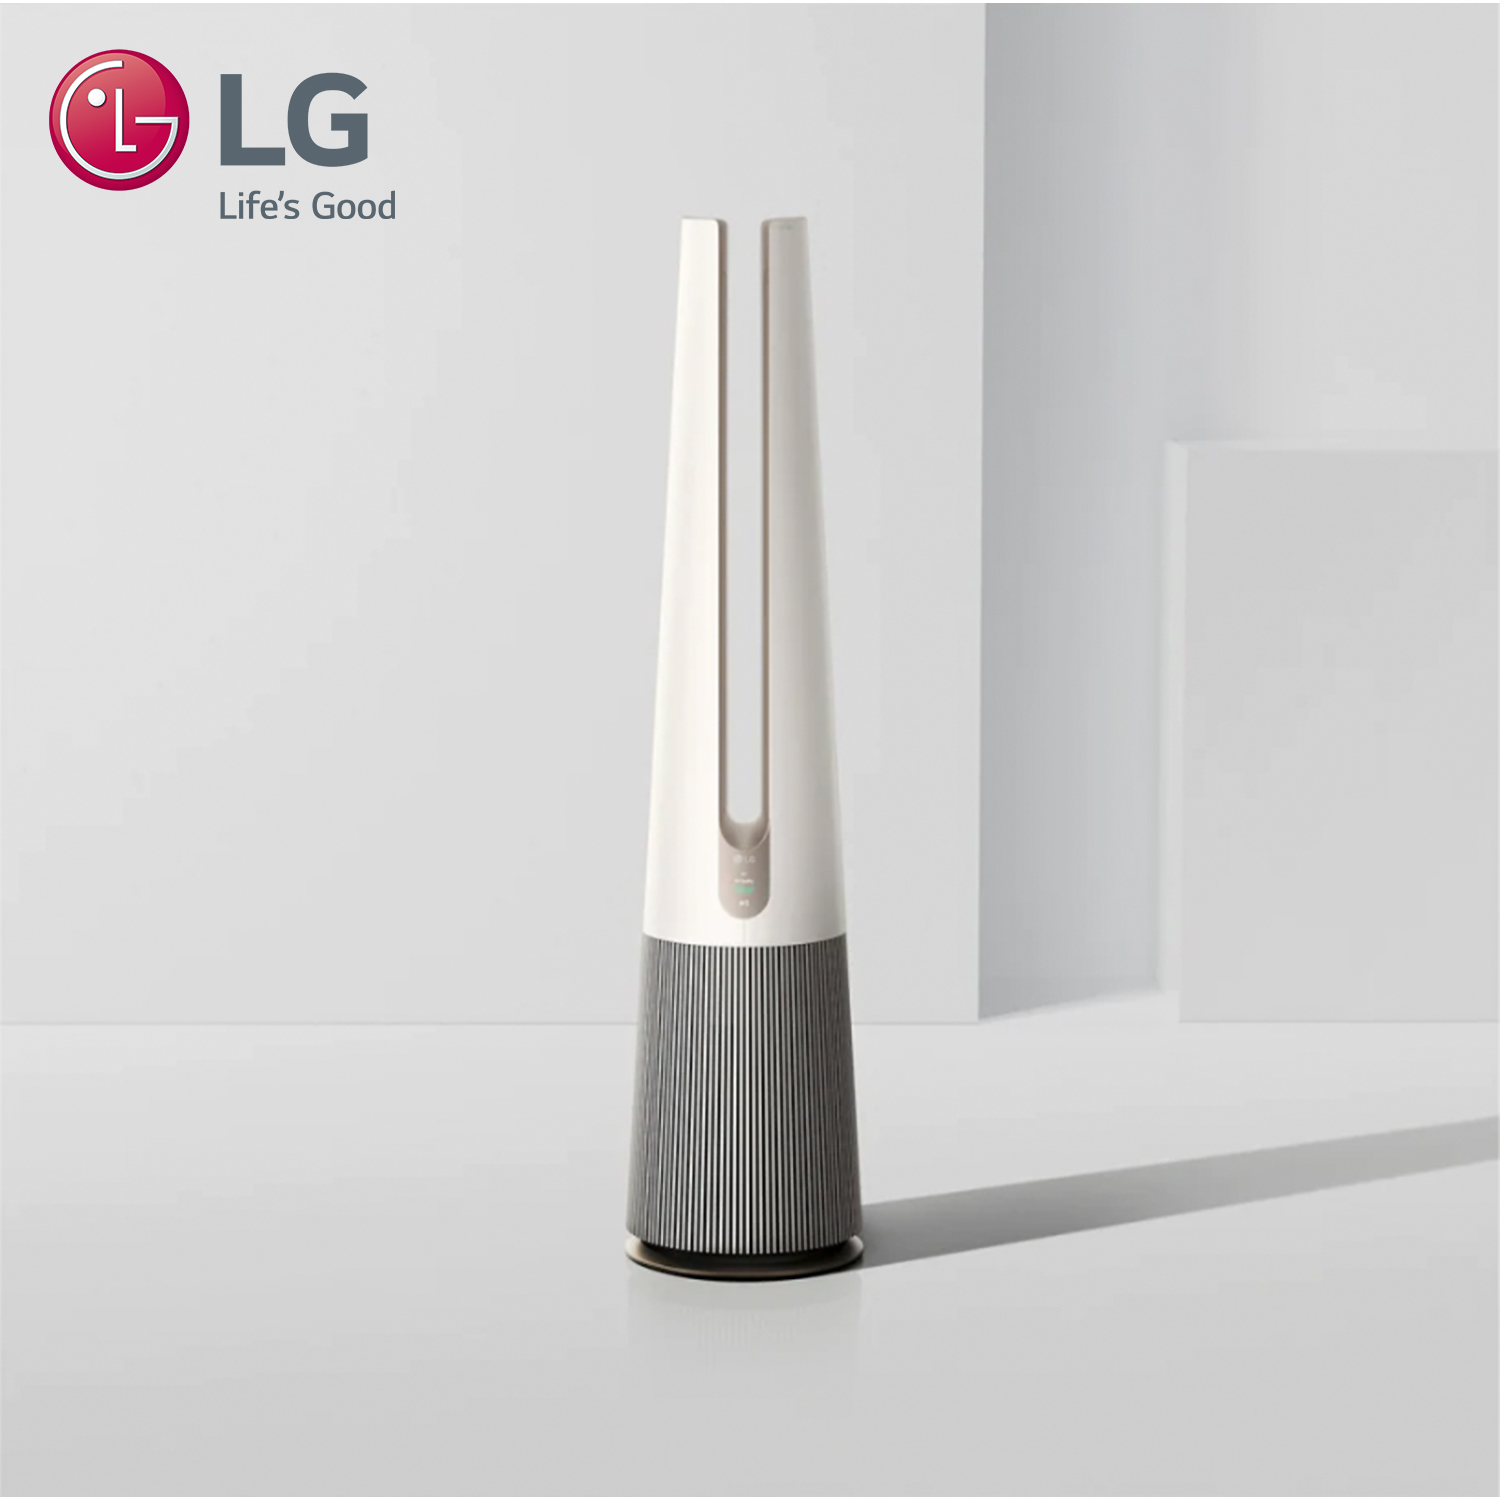 LG AeroTower空氣清淨機(象牙白)